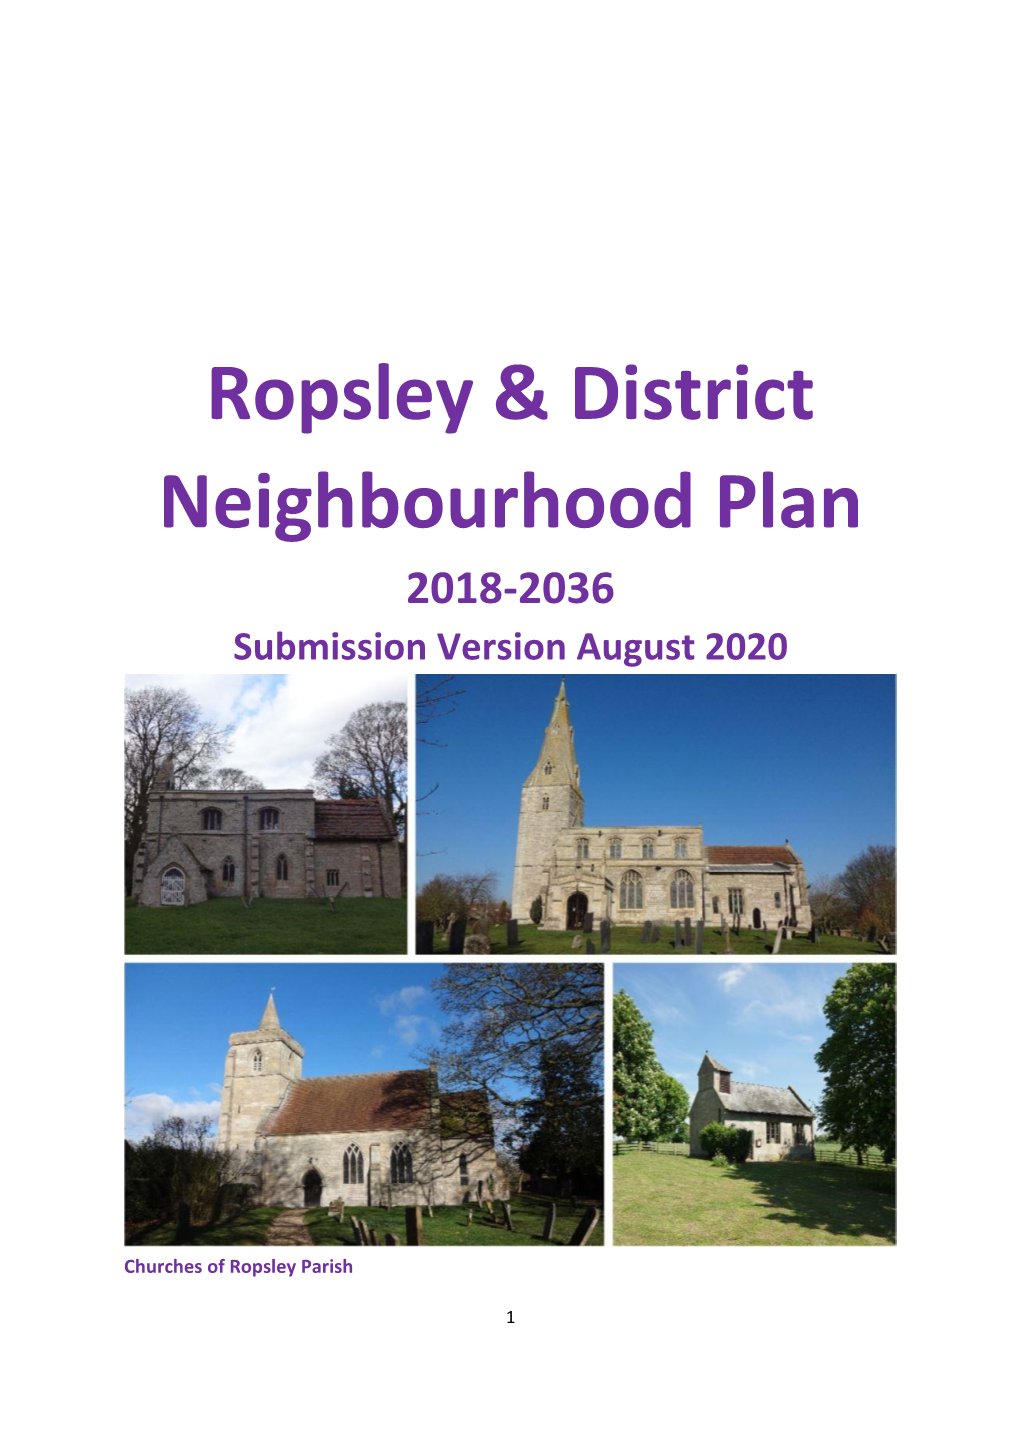 Ropsley & District Neighbourhood Plan